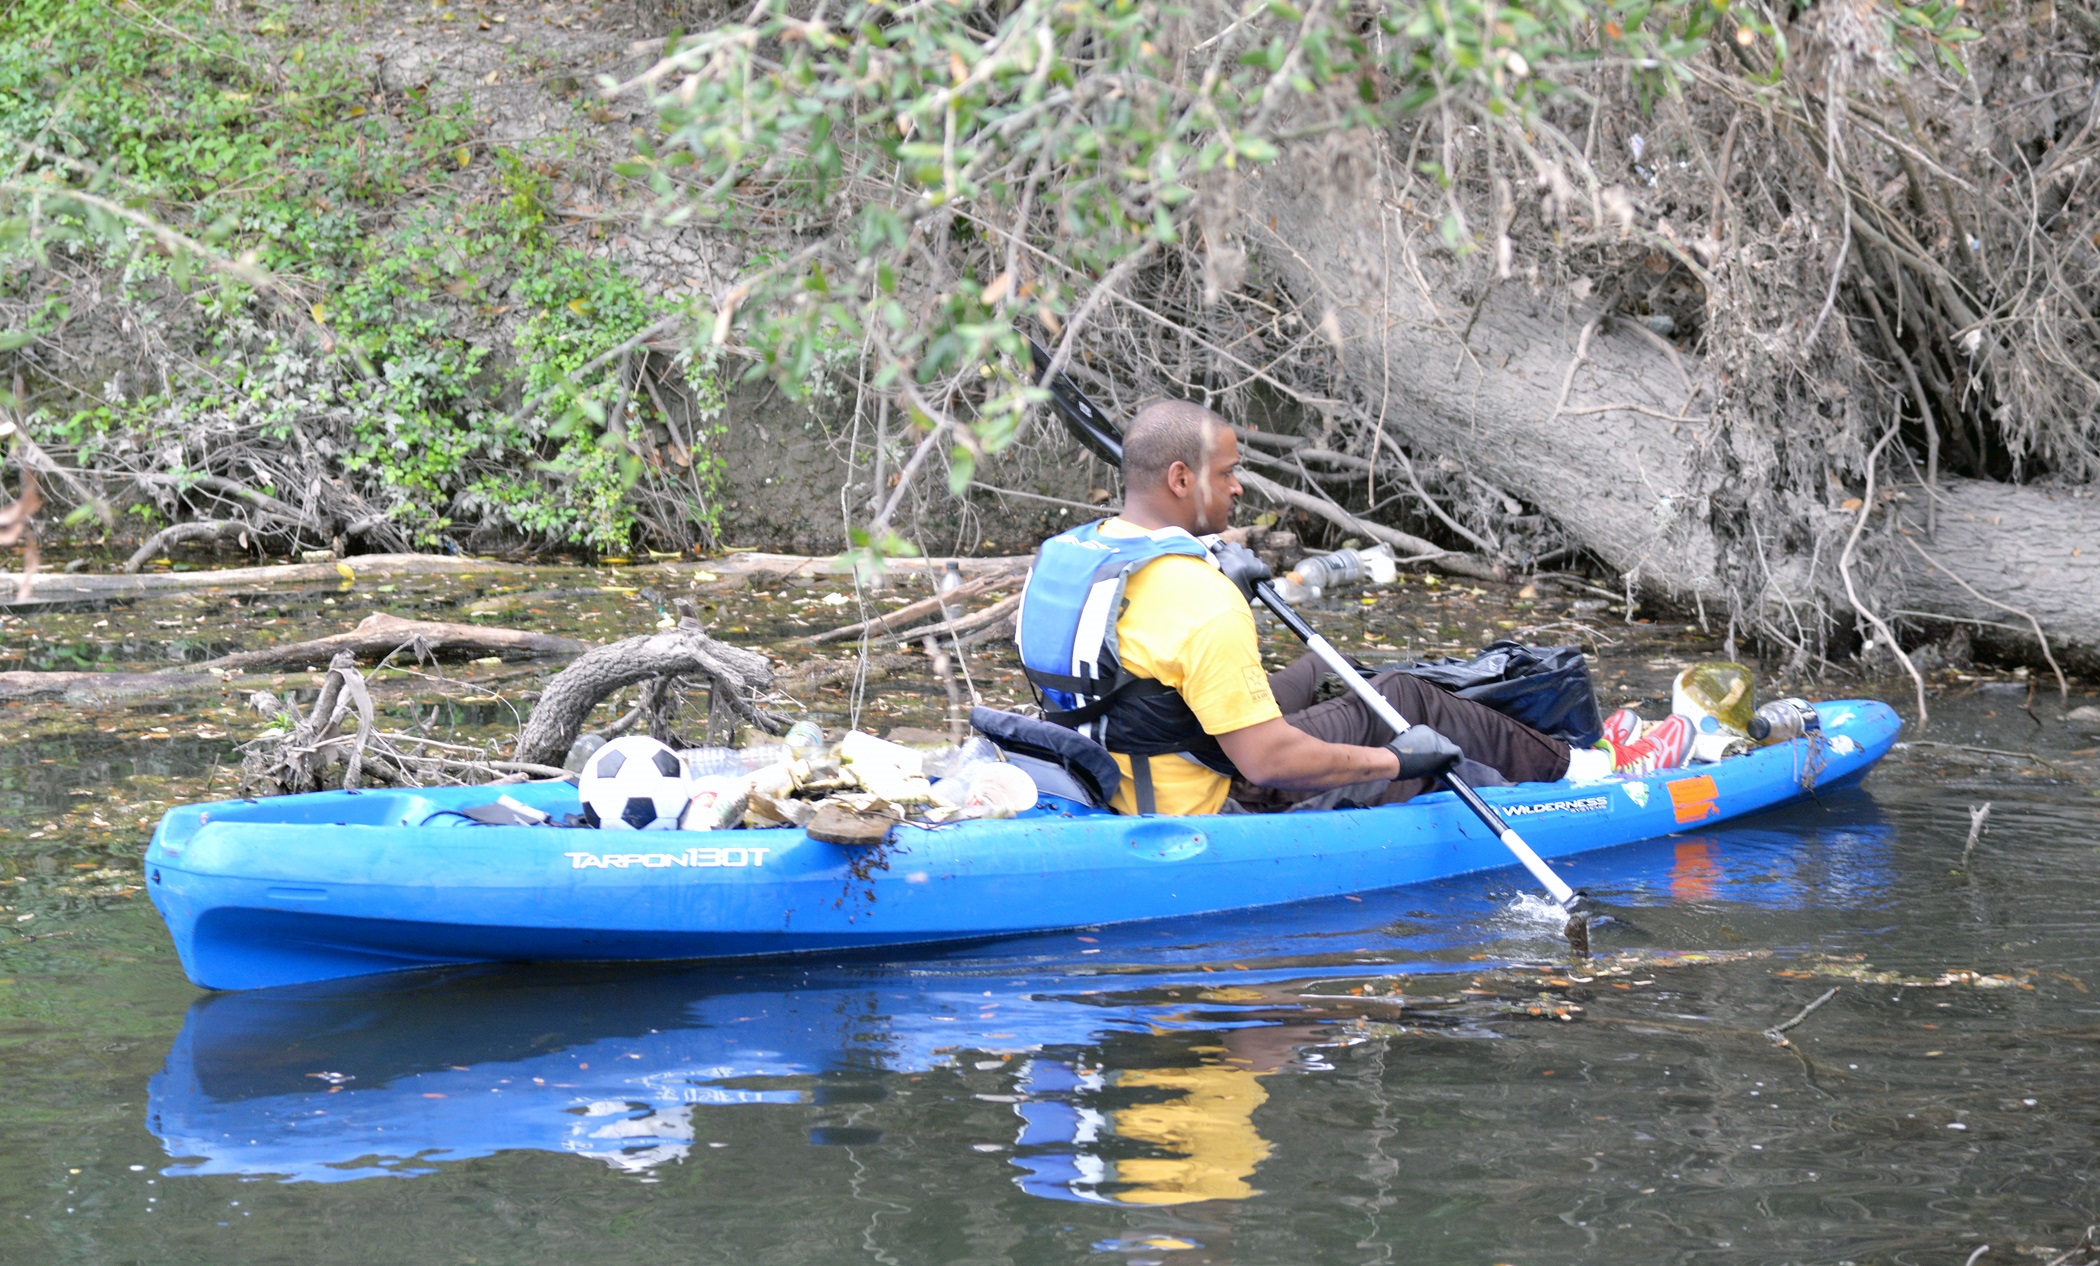 Basura Bash Looks To Clean Out Waterways Around Jbsa Fort Sam Houston Joint Base San Antonio News